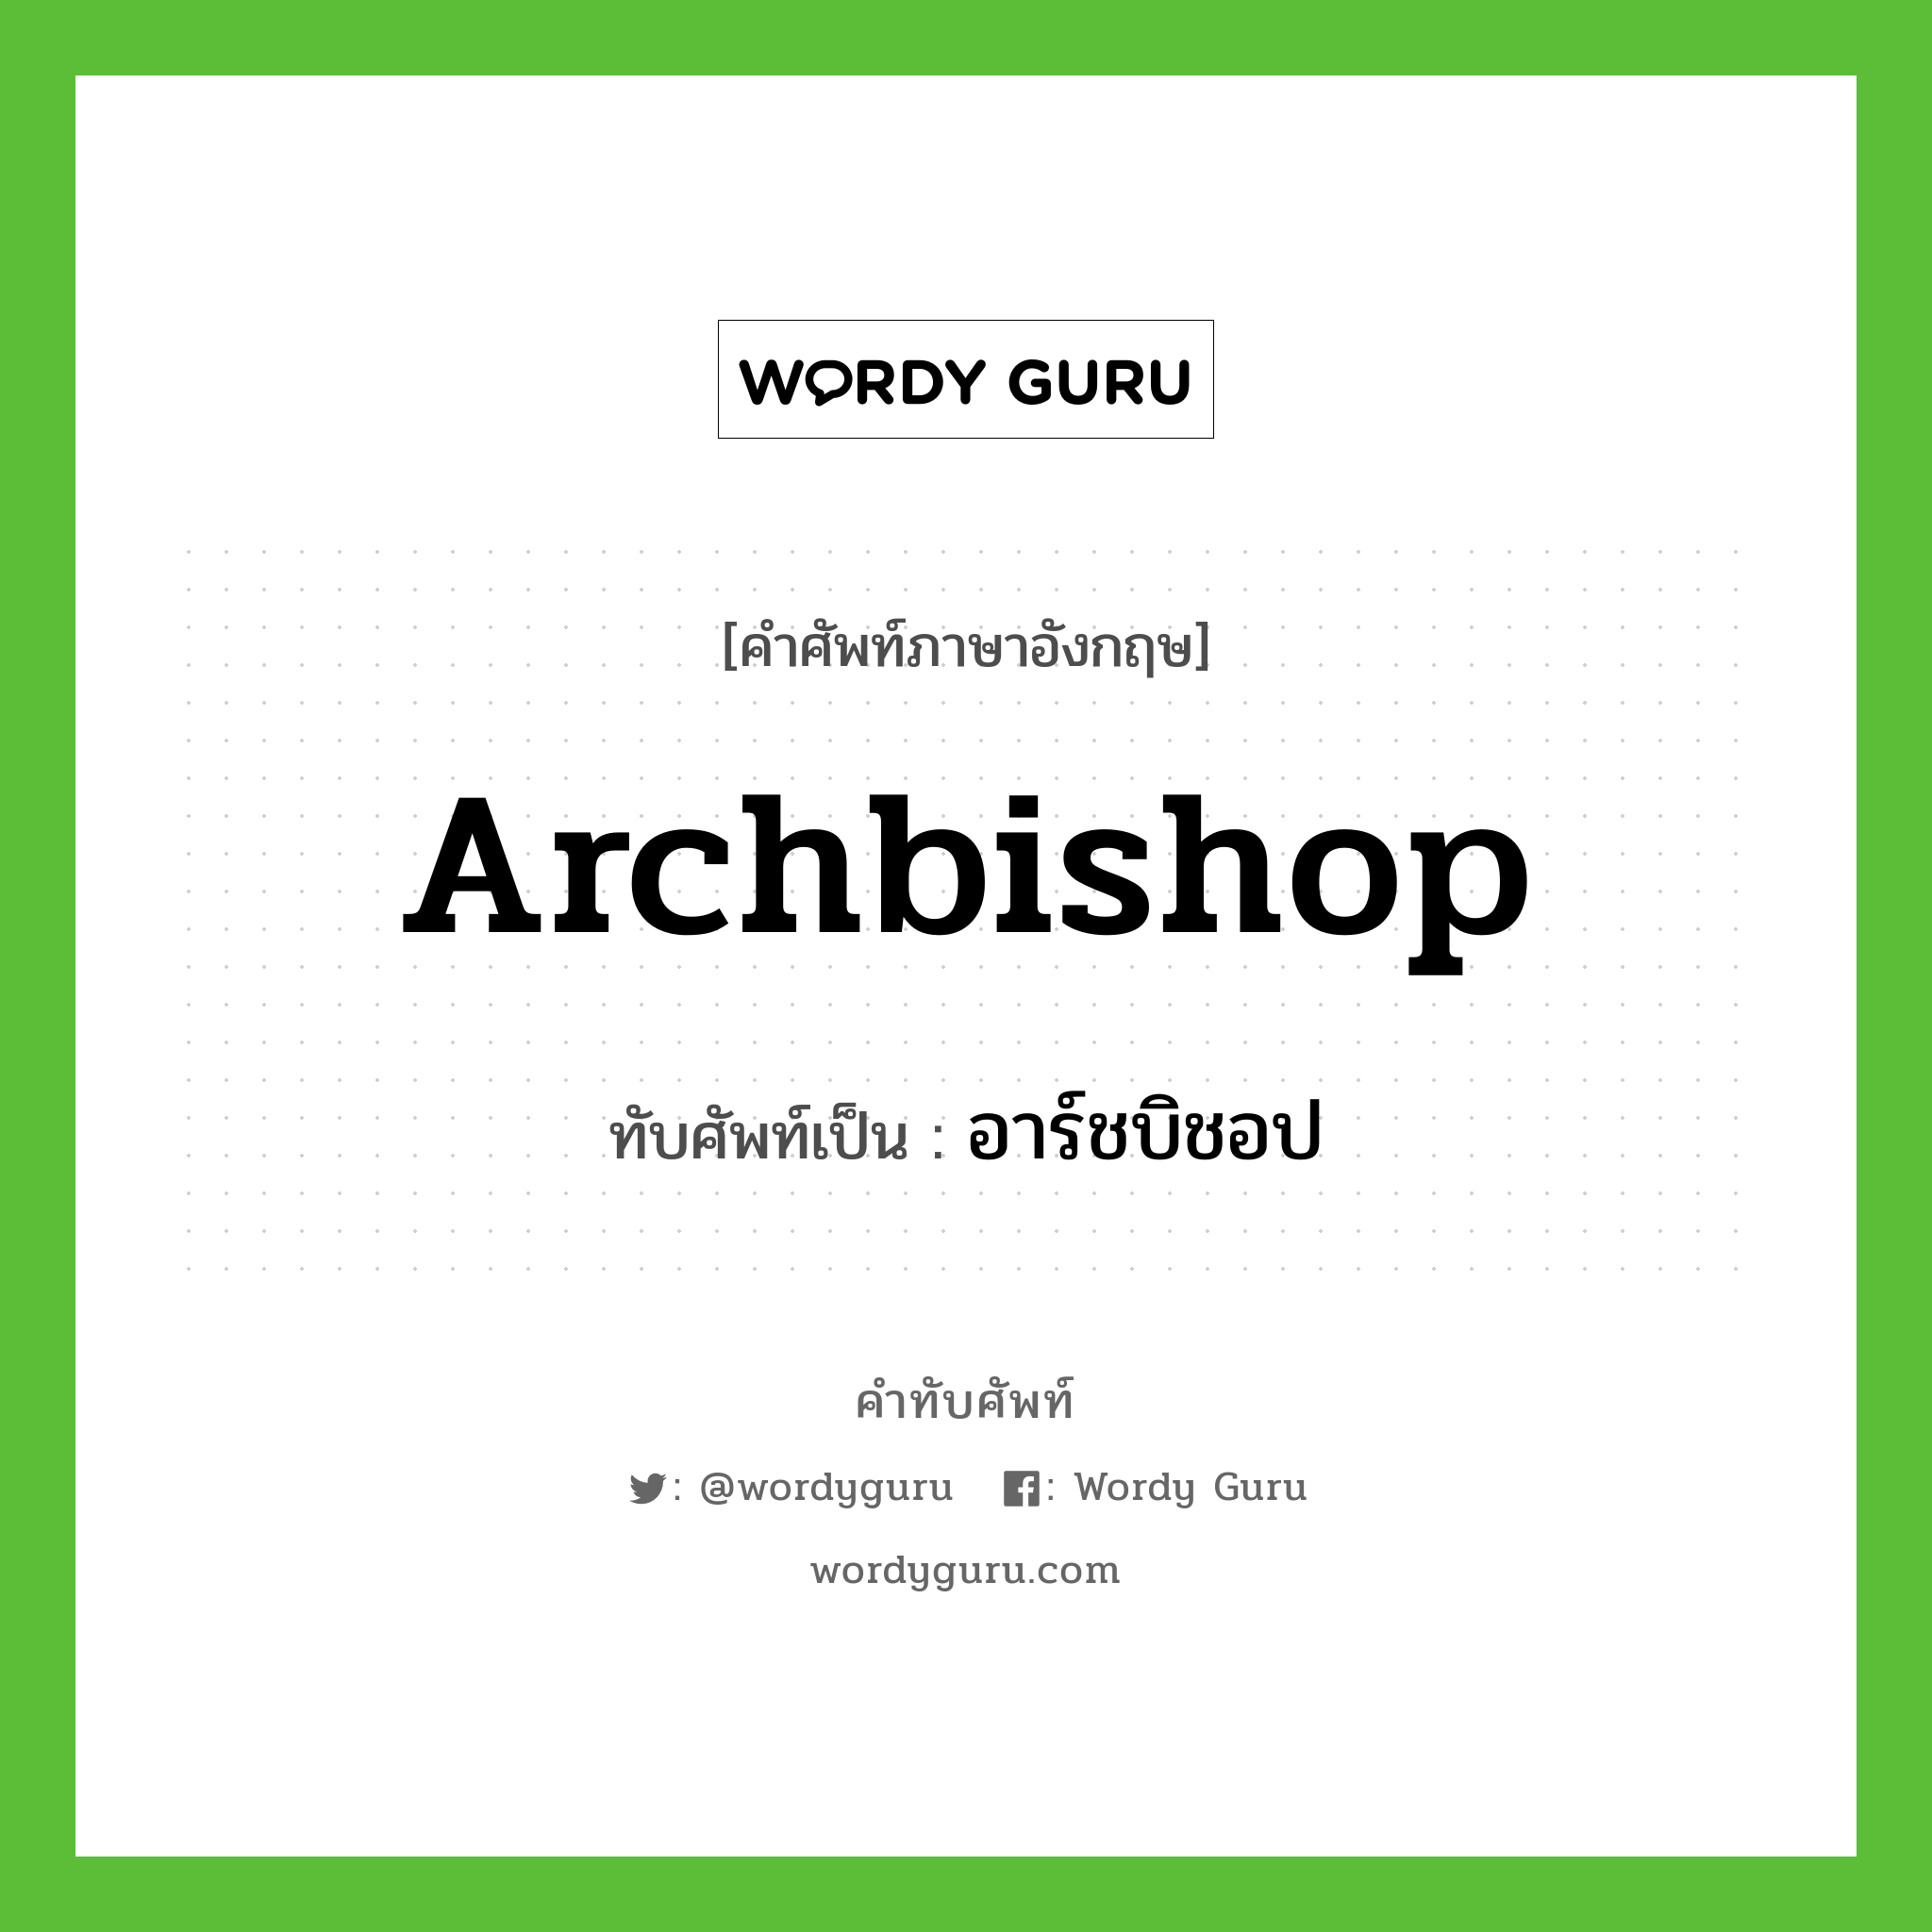 archbishop เขียนเป็นคำไทยว่าอะไร?, คำศัพท์ภาษาอังกฤษ archbishop ทับศัพท์เป็น อาร์ชบิชอป